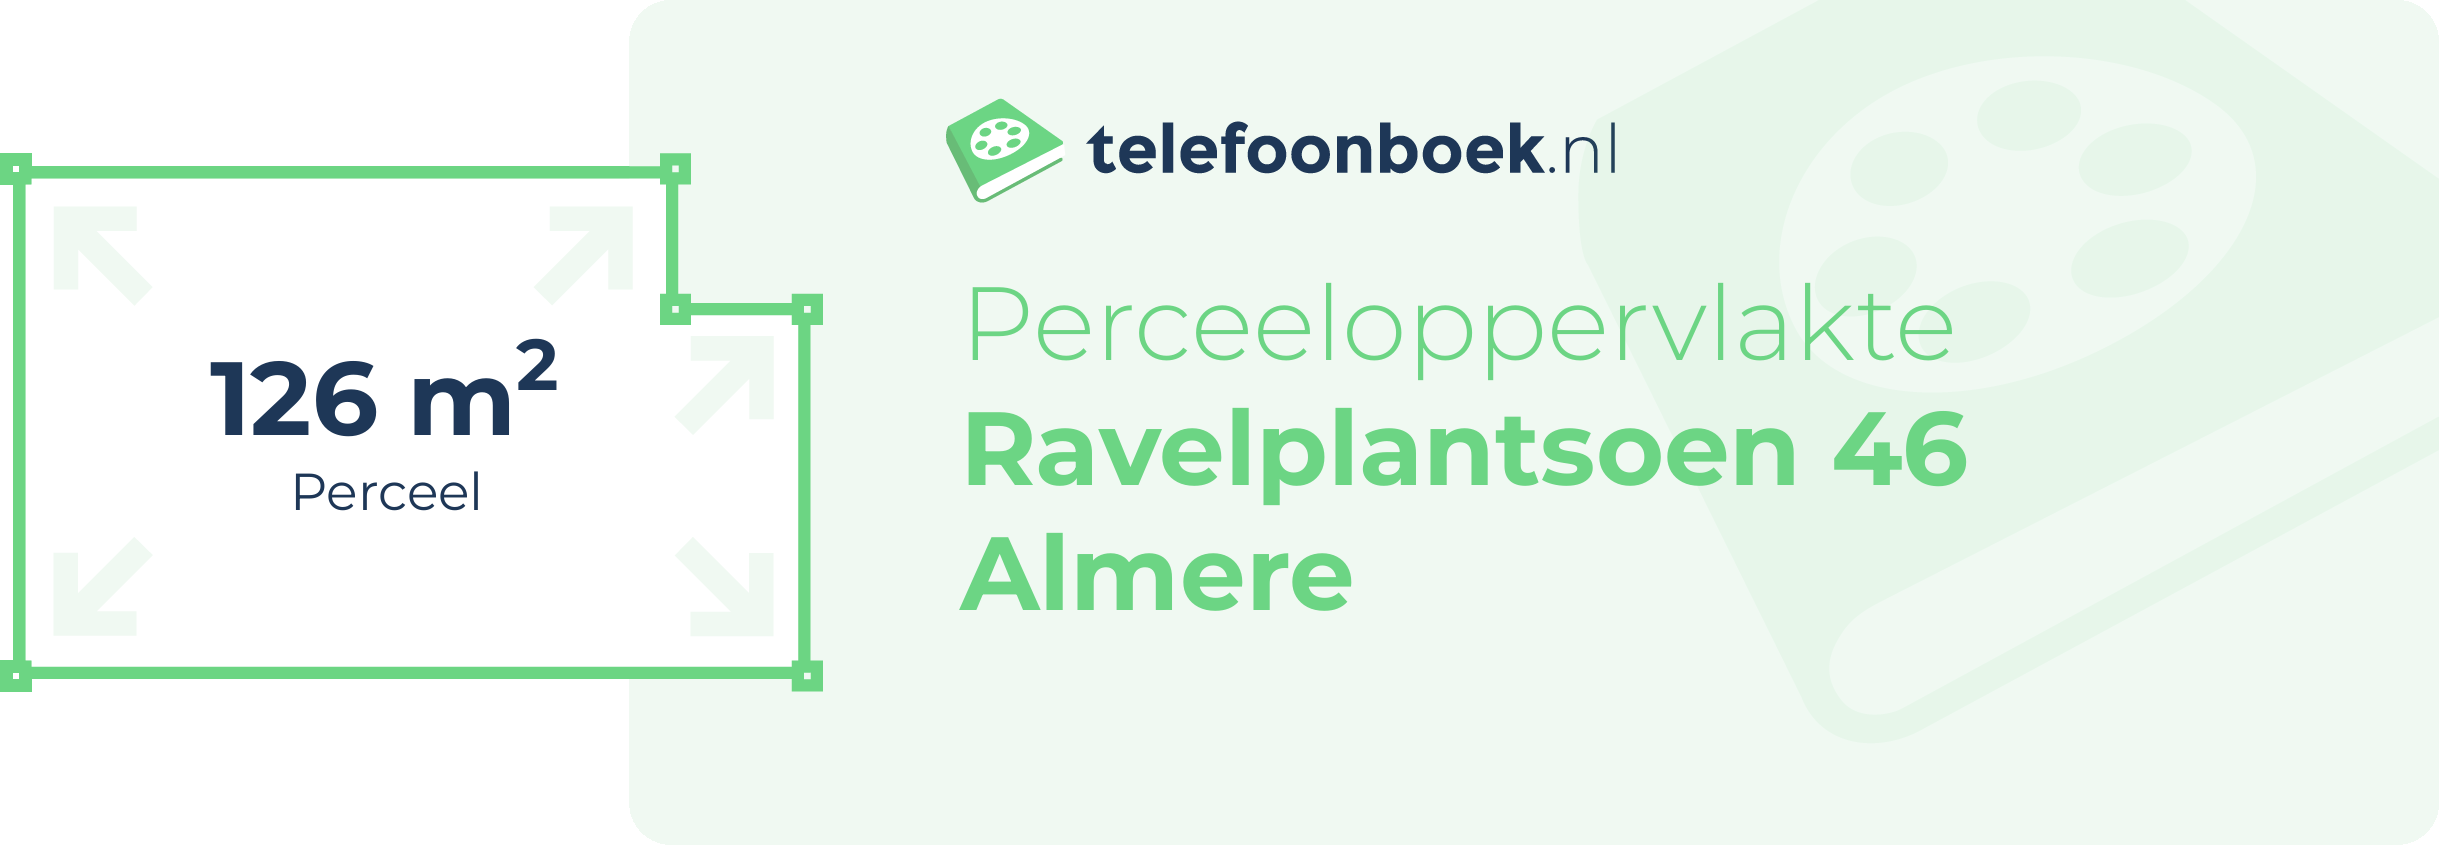 Perceeloppervlakte Ravelplantsoen 46 Almere